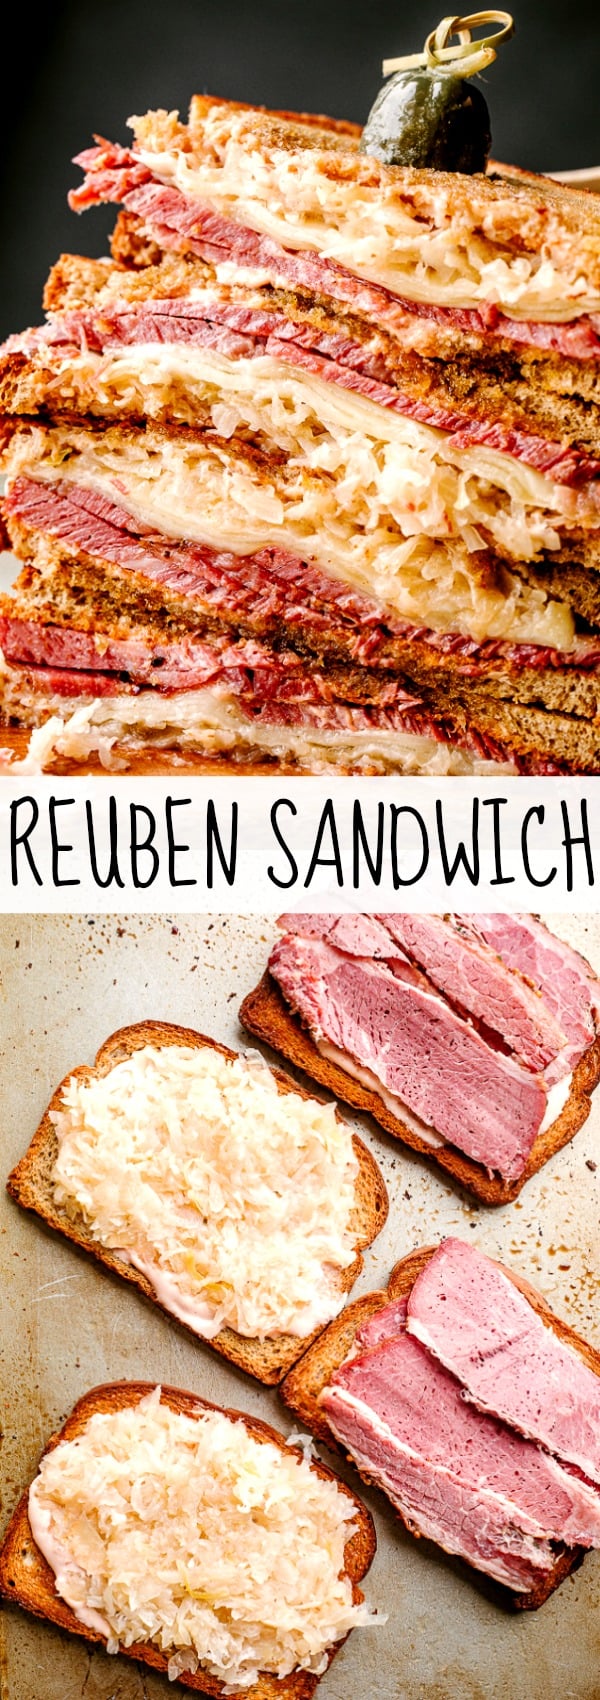 Reuben Sandwich with Homemade Russian Dressing | Diethood